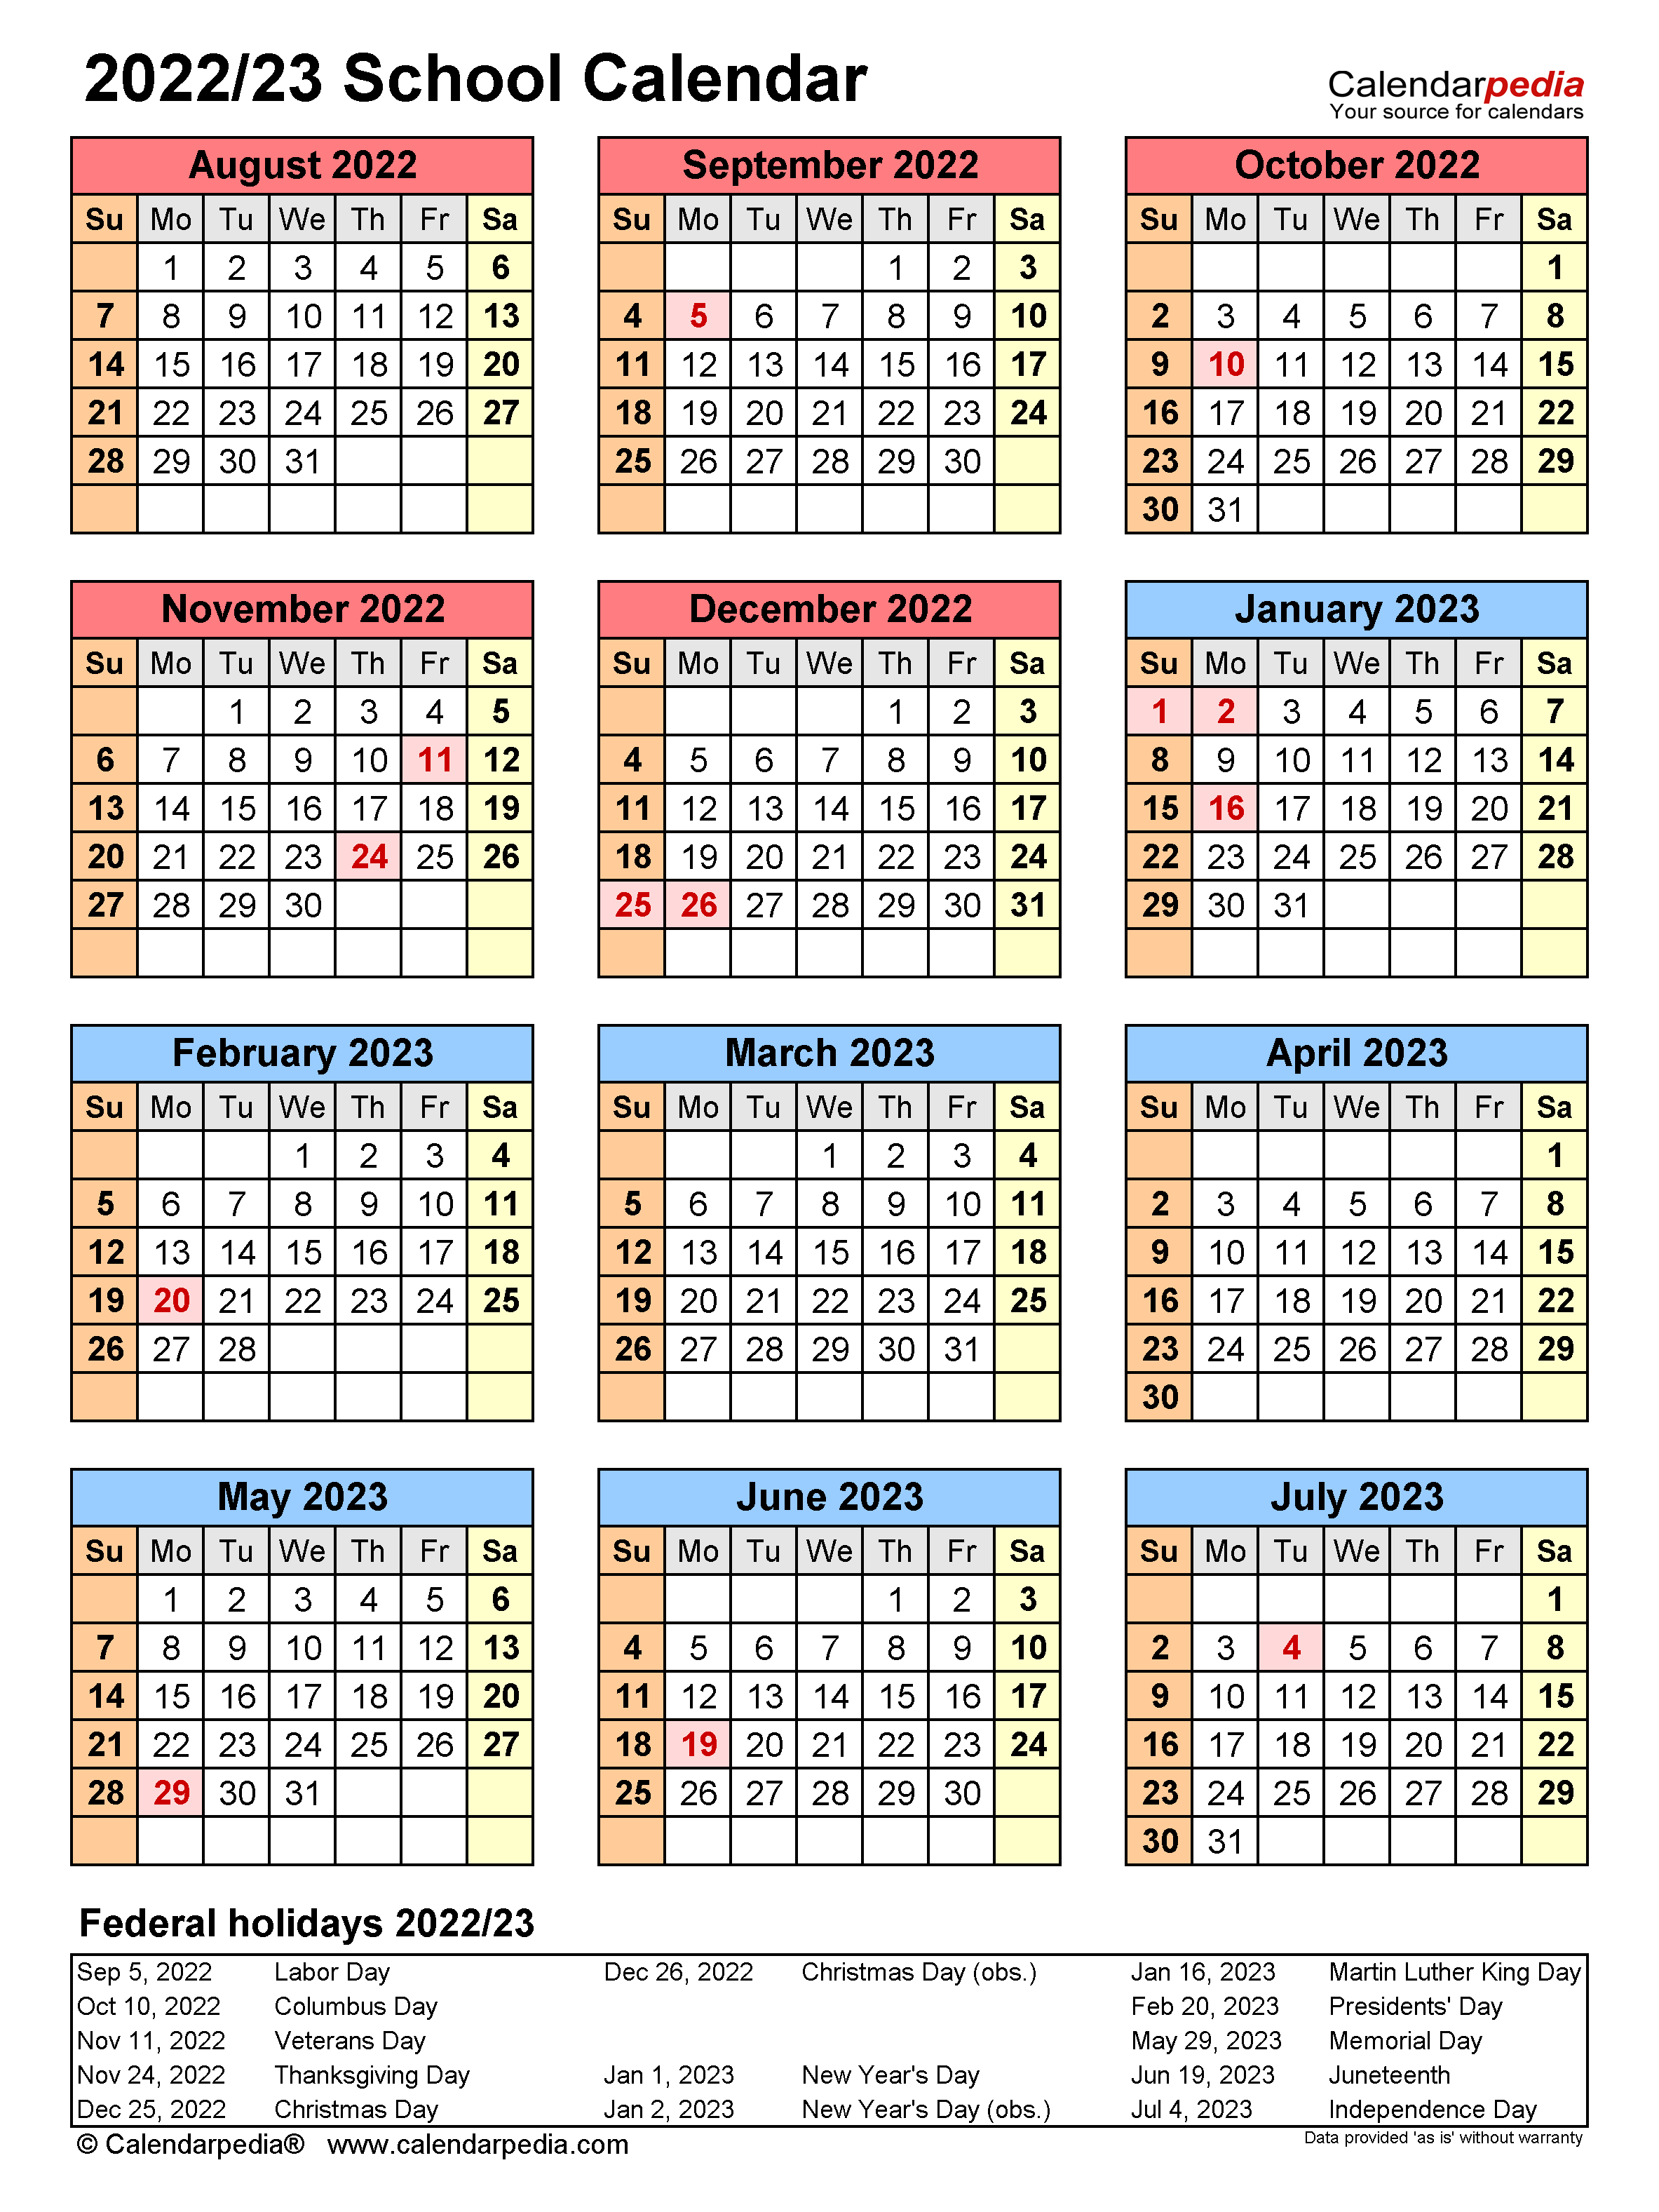 bullitt-county-school-calendar-2022-2022-schoolcalendars